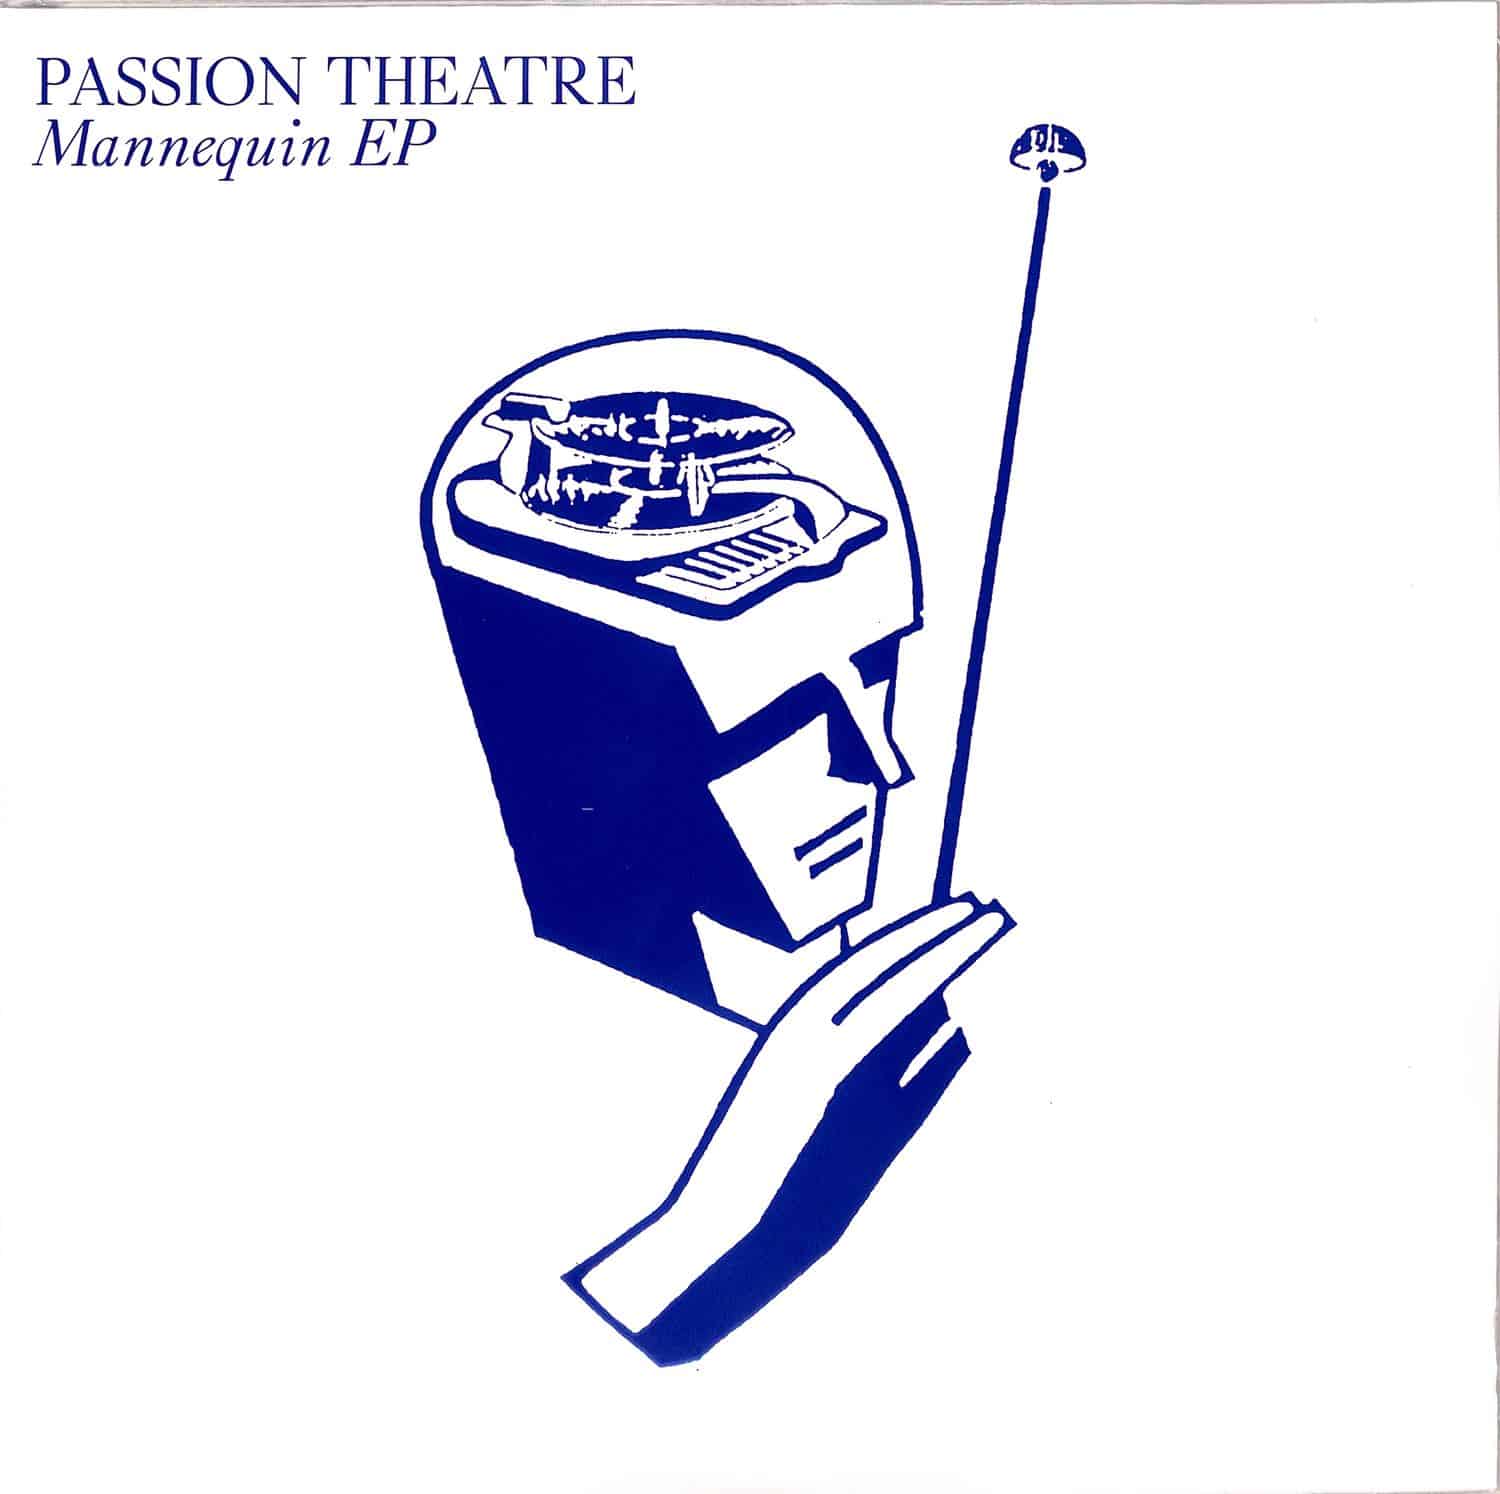 Passion Theatre - STRANGE DESIRE / MANNEQUIN EP 